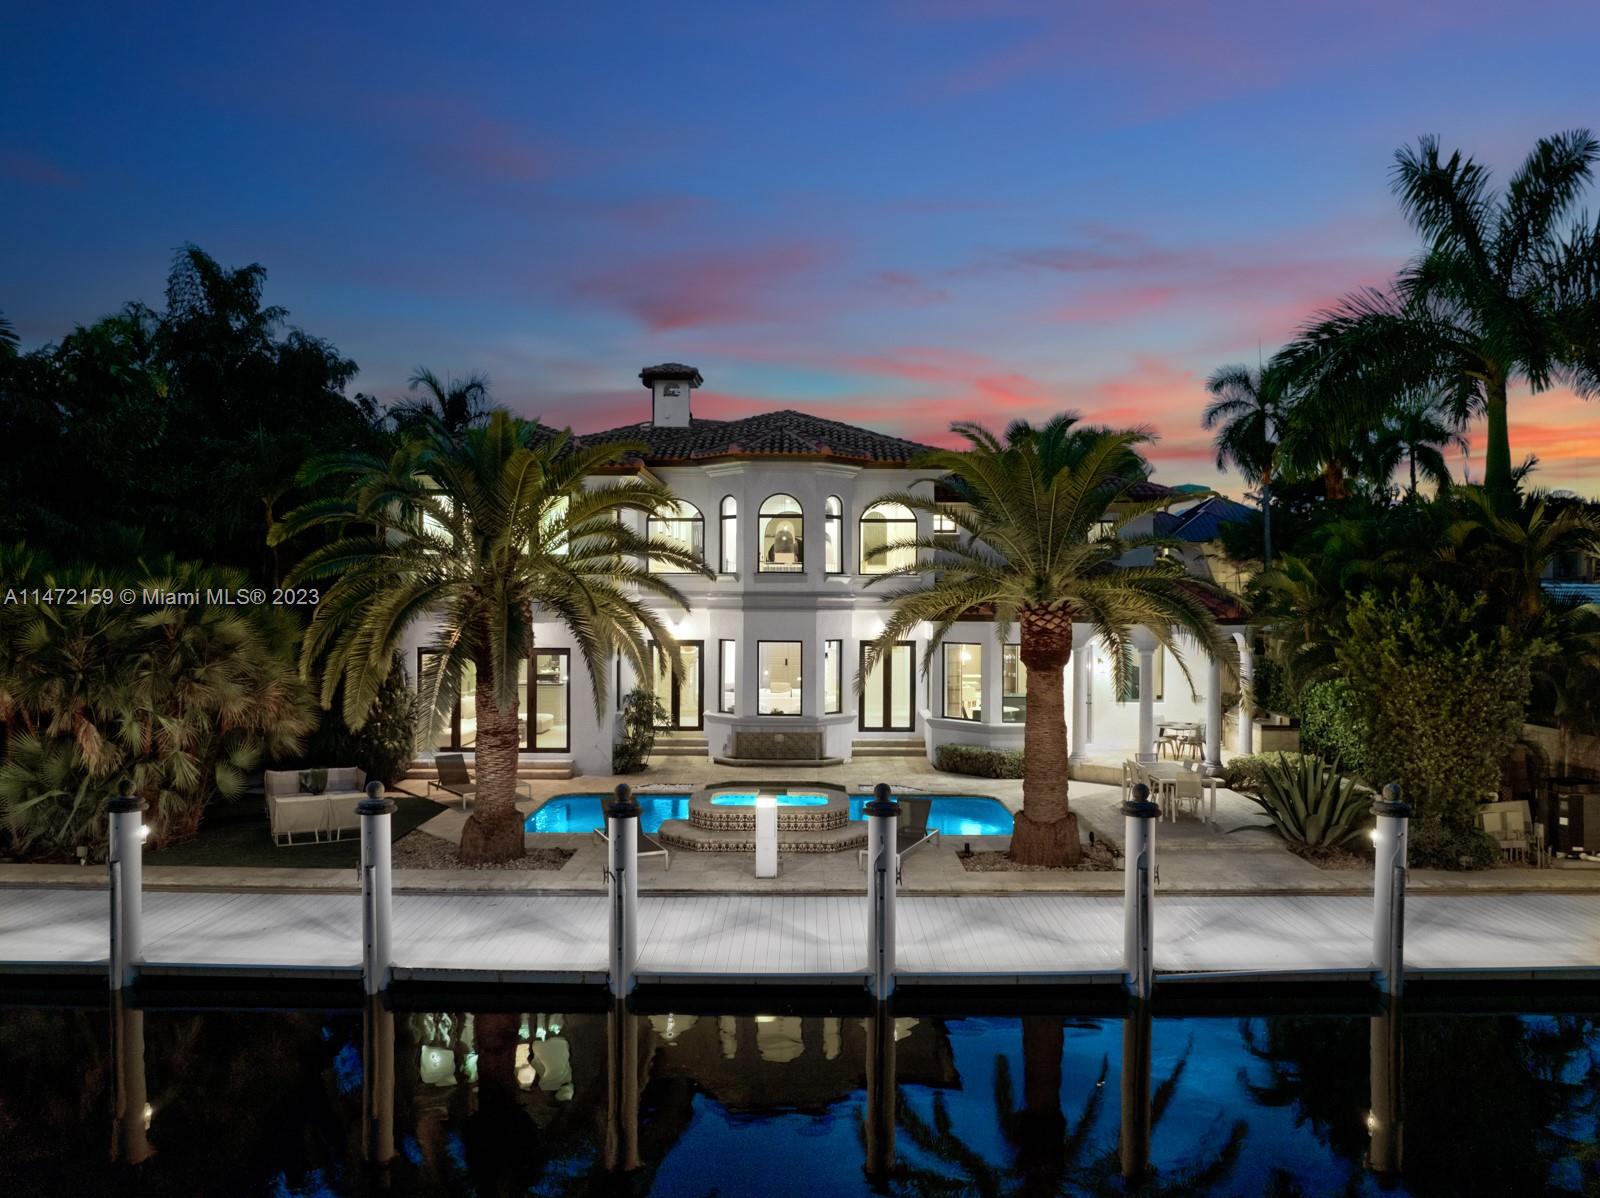 Property for Sale at 168 Fiesta Way, Fort Lauderdale, Broward County, Florida - Bedrooms: 6 
Bathrooms: 6  - $5,990,000